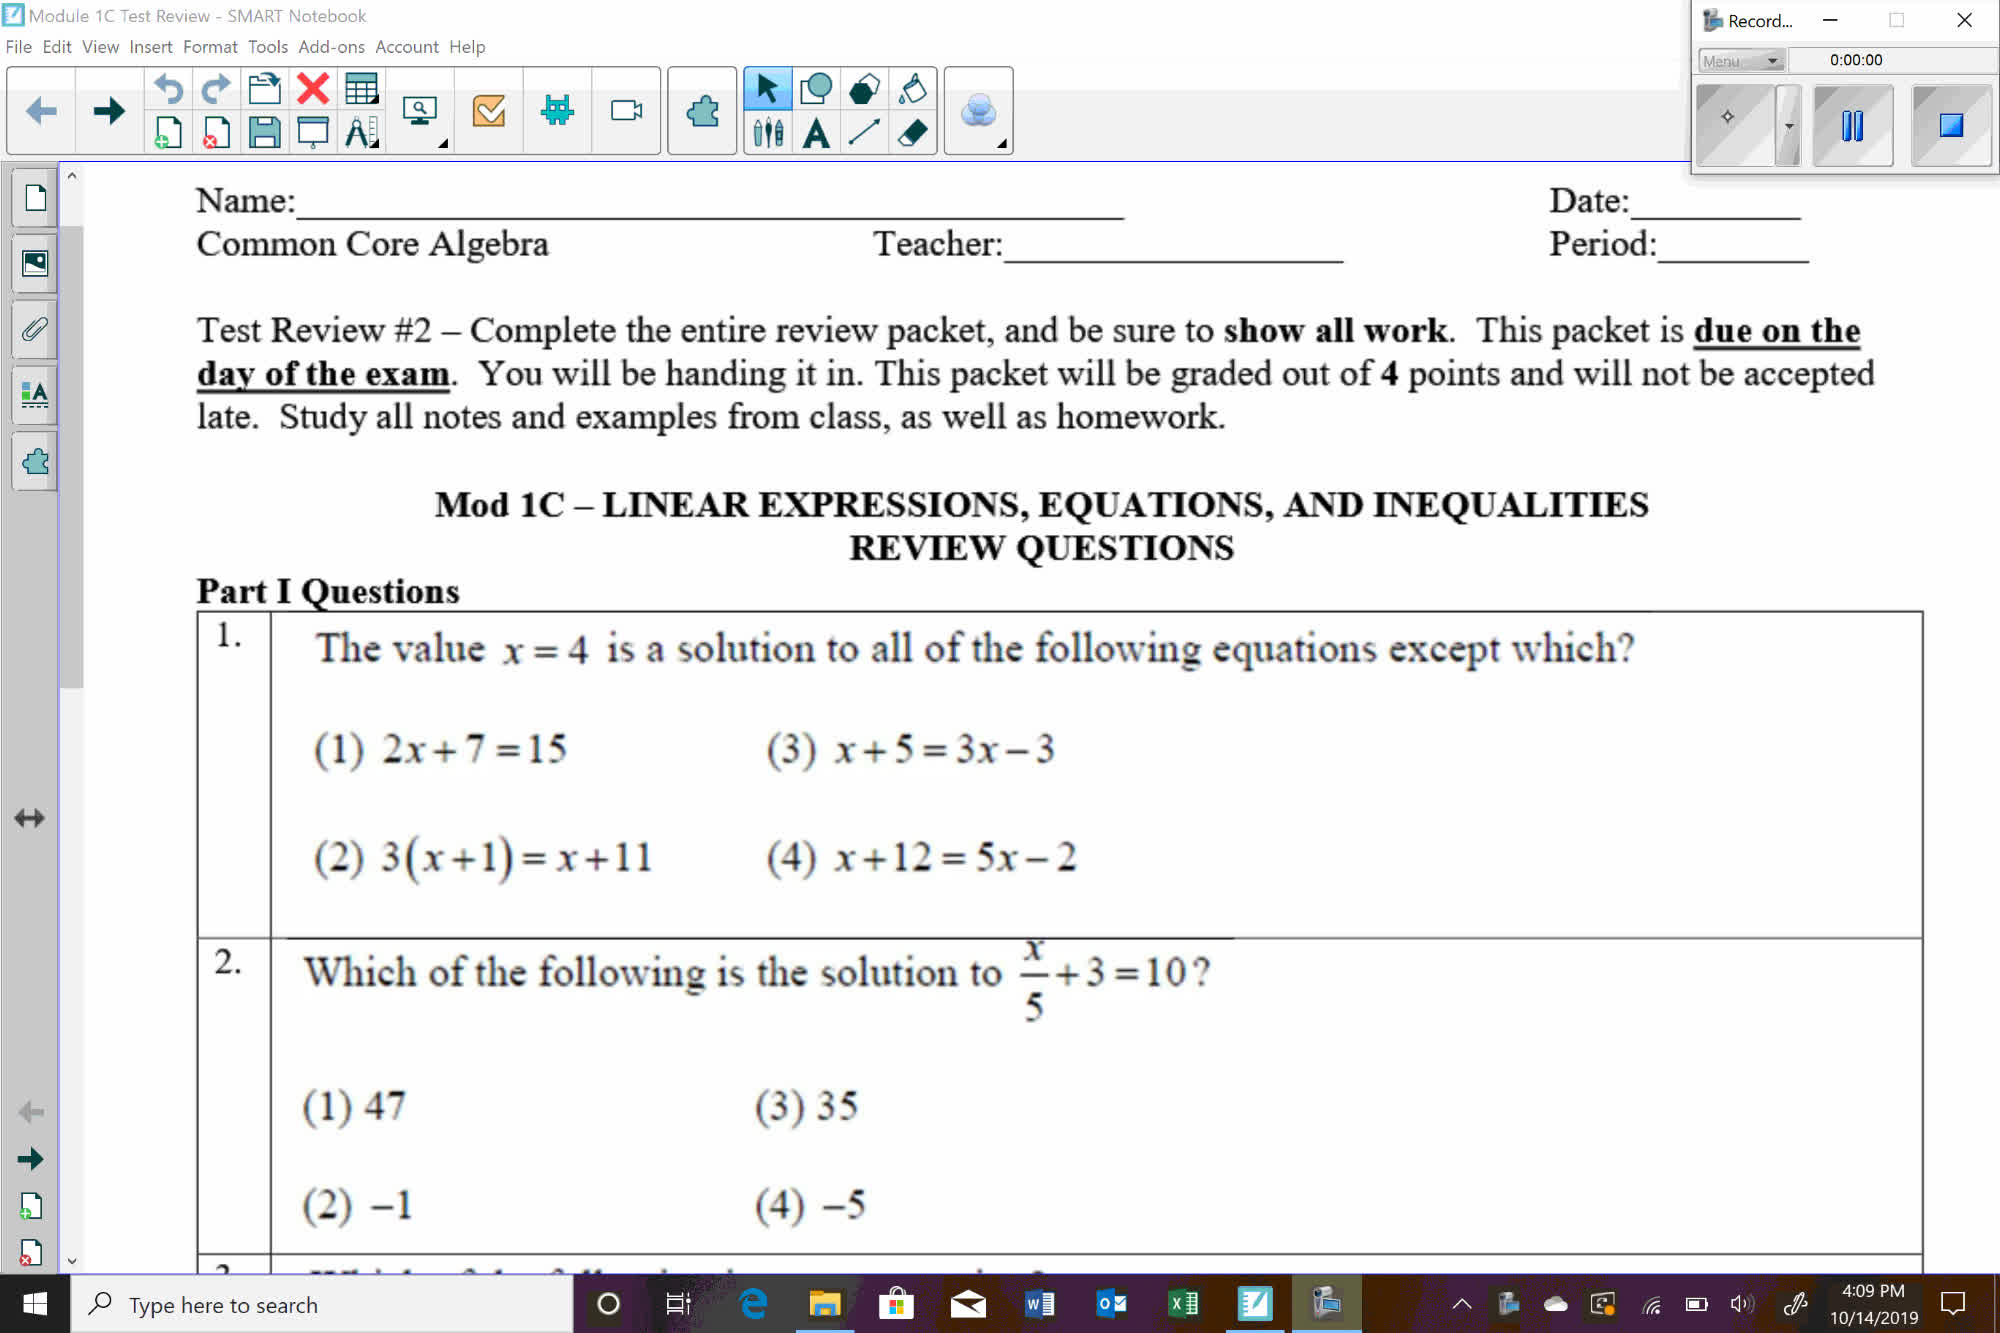 Algebra I Test #2 (Module 1C) Review